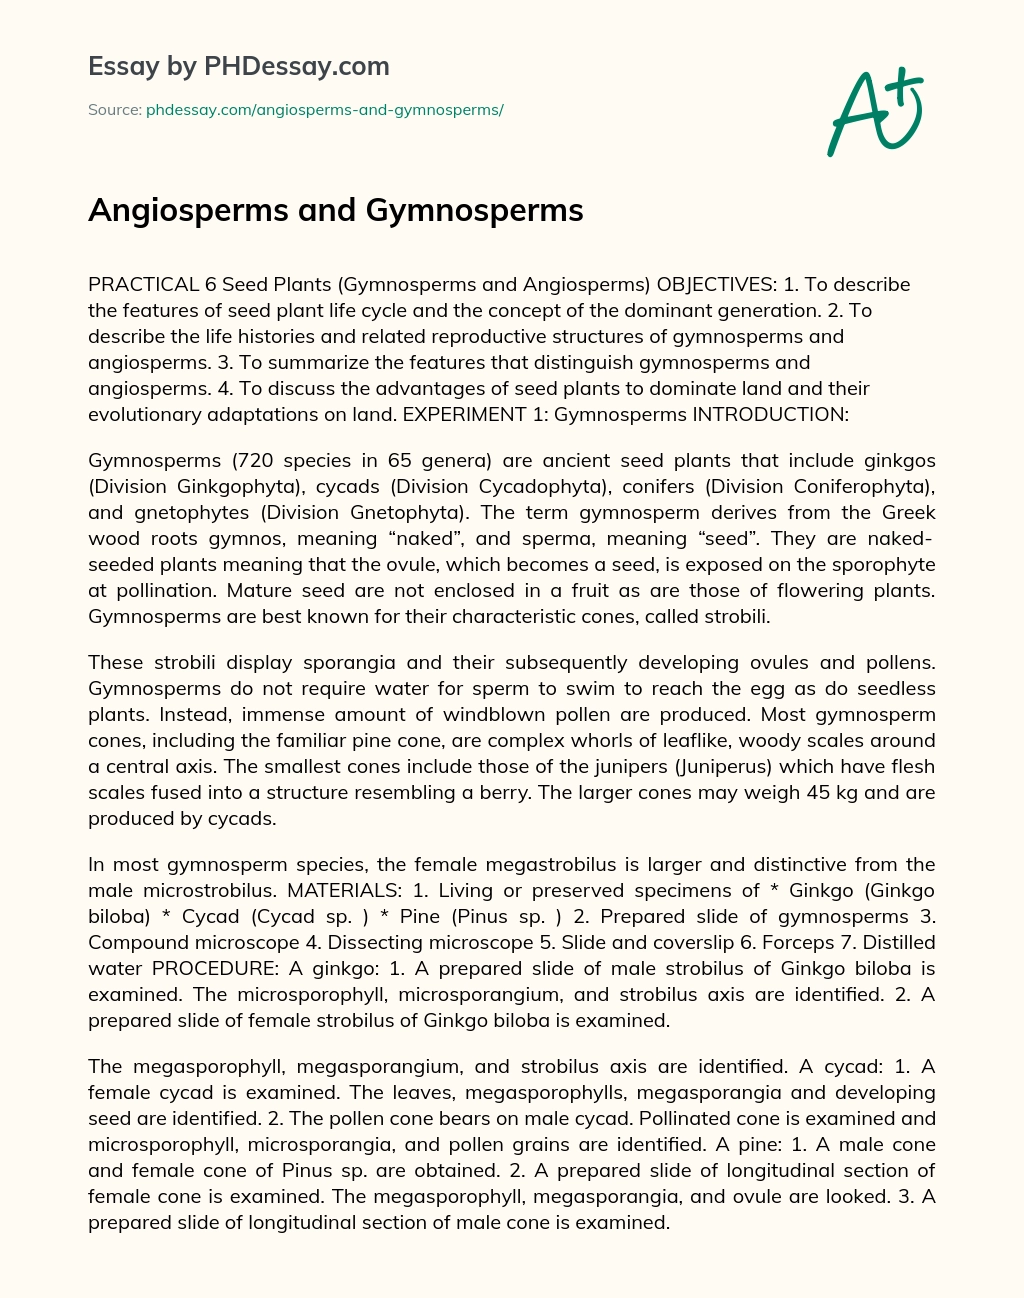 Angiosperms and Gymnosperms essay